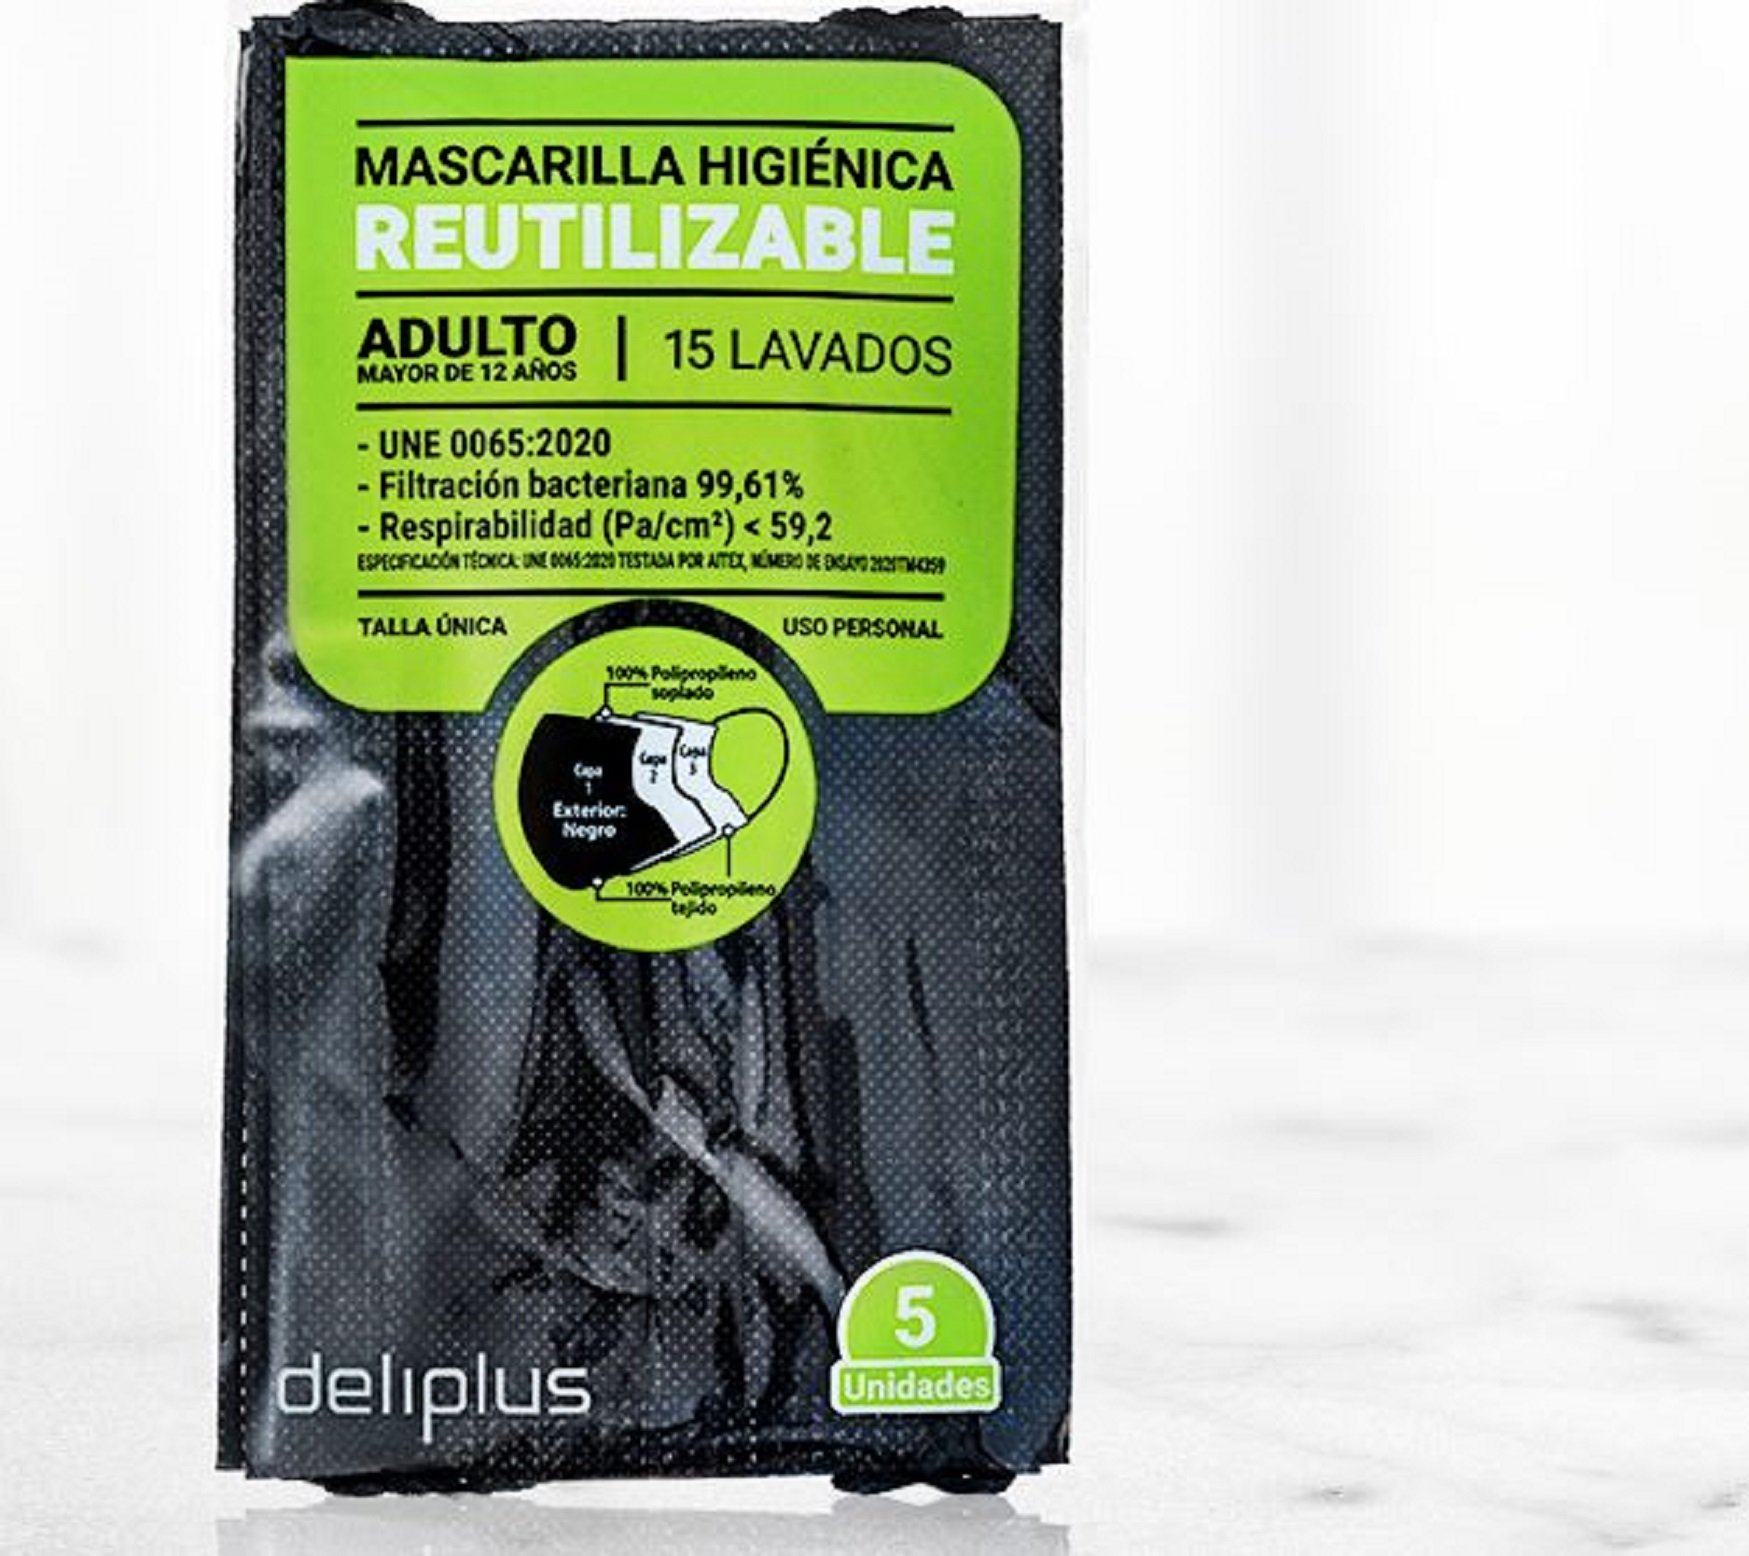 Mascarilla reutilizable / Mercadona